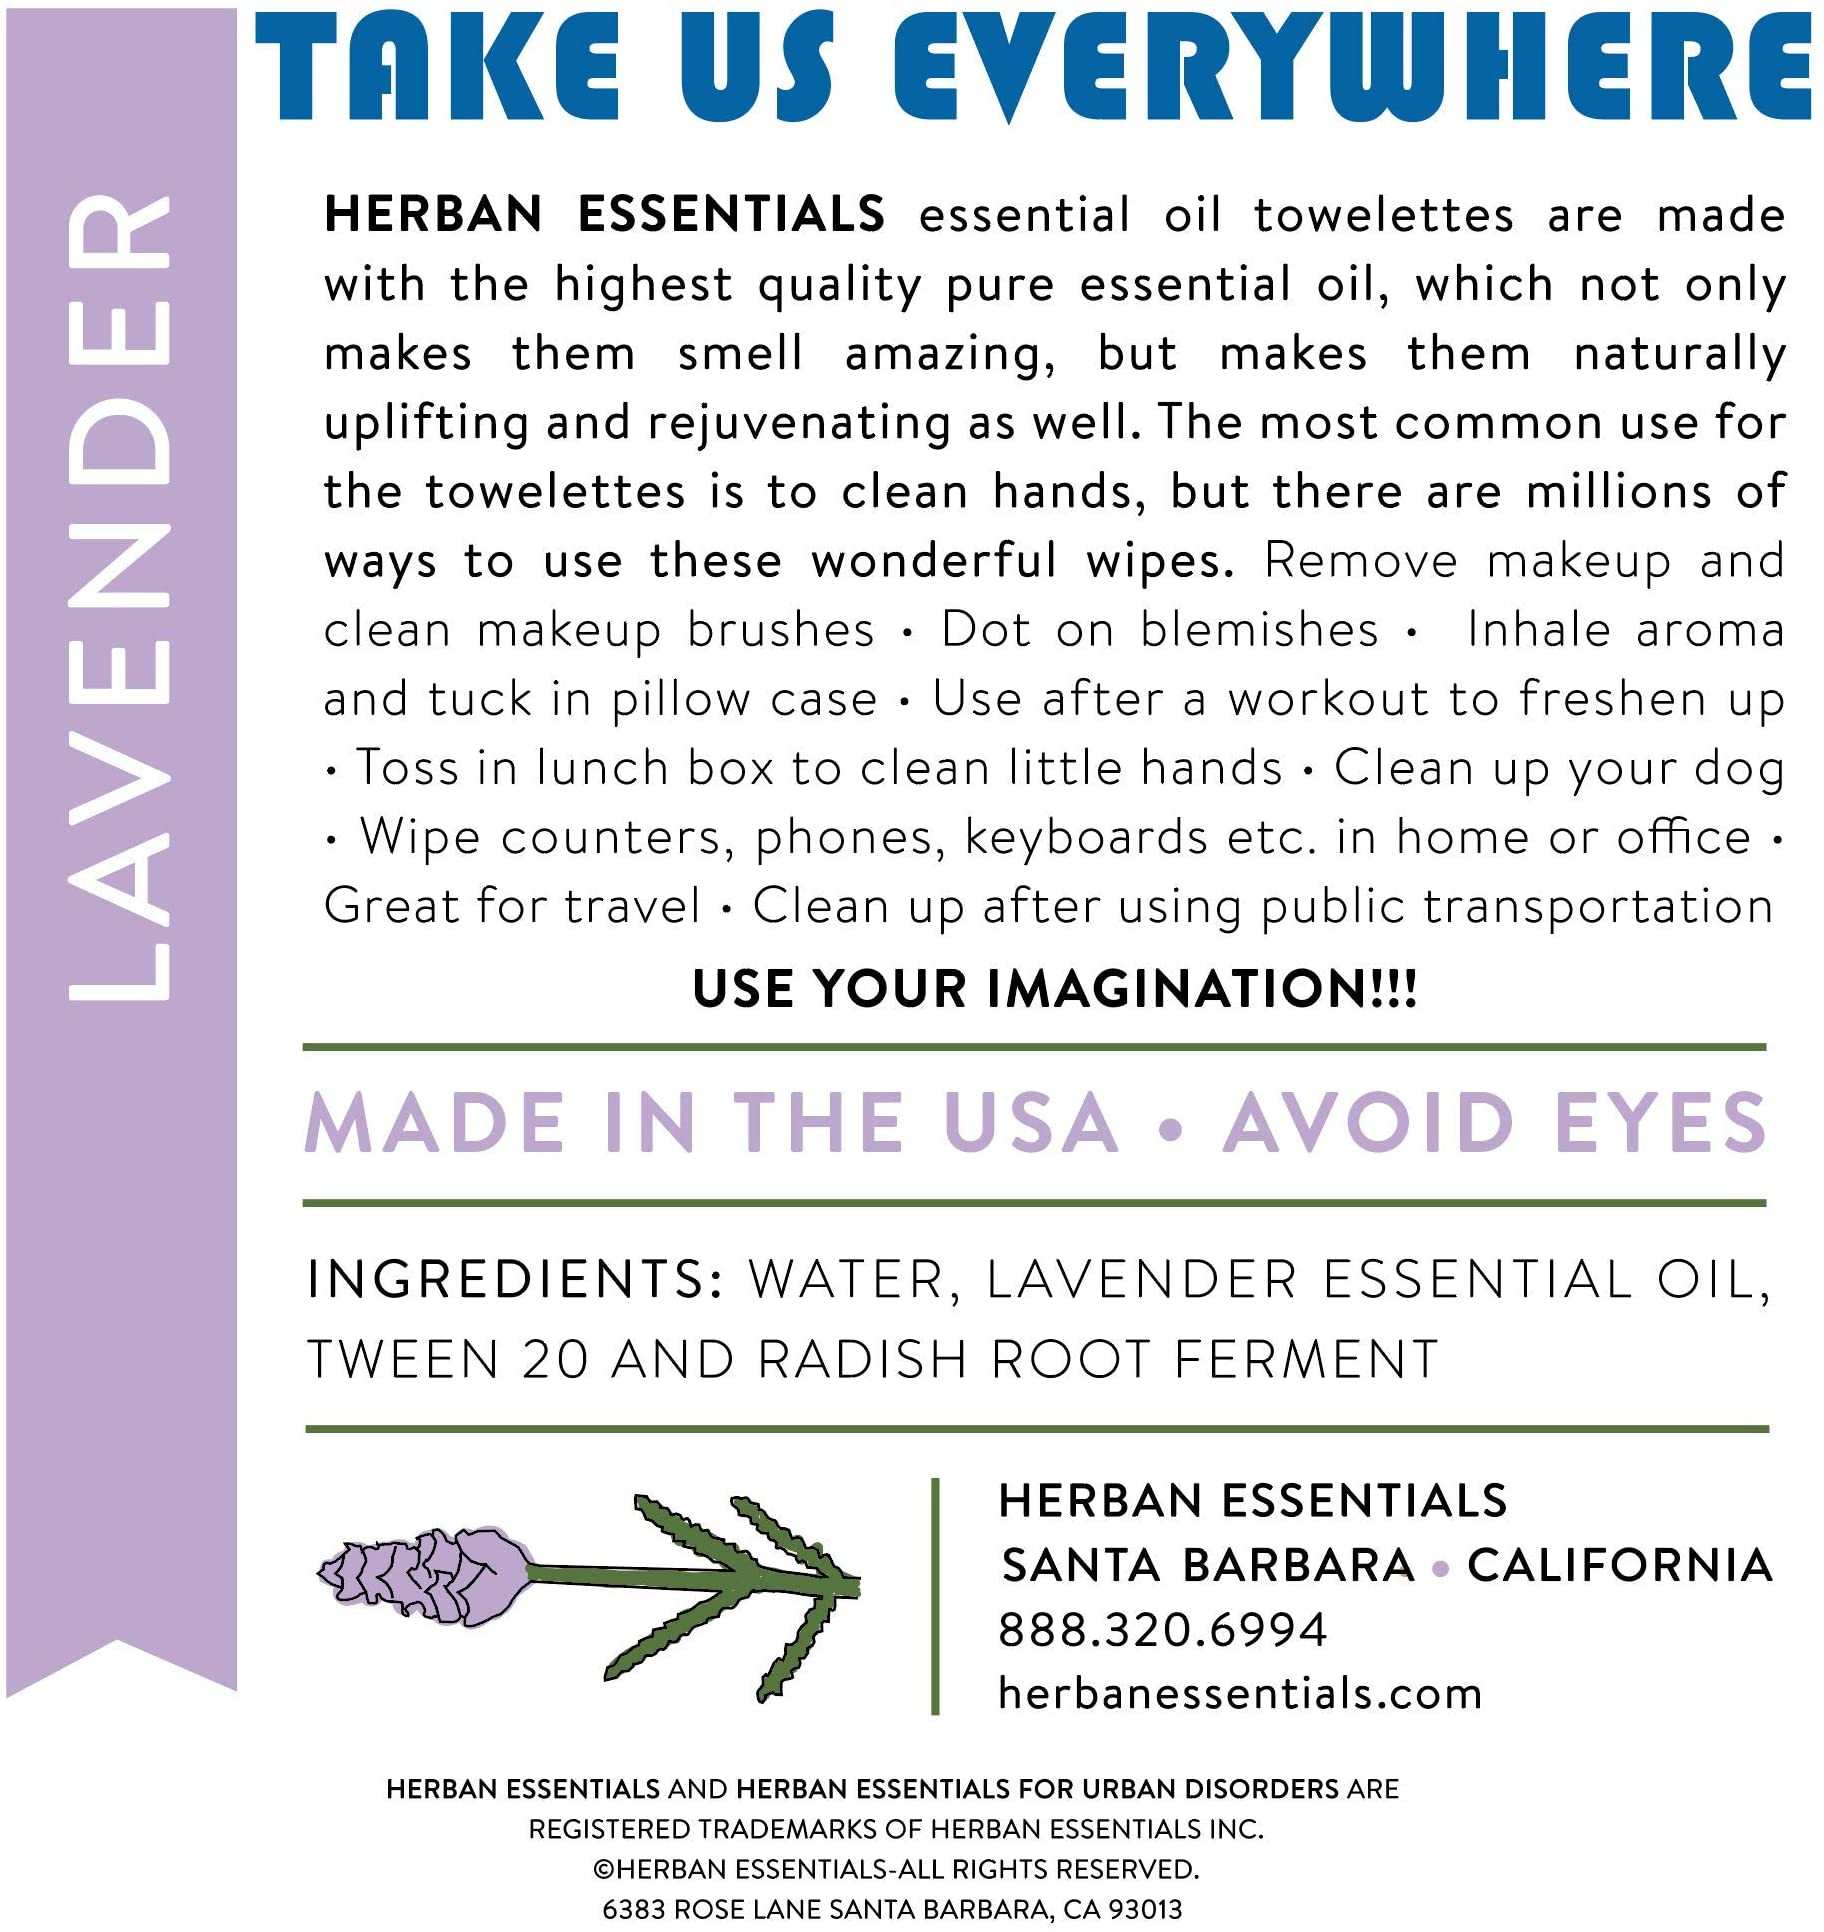 Herban Essentials Essential Oil Towelettes Color Lavender None